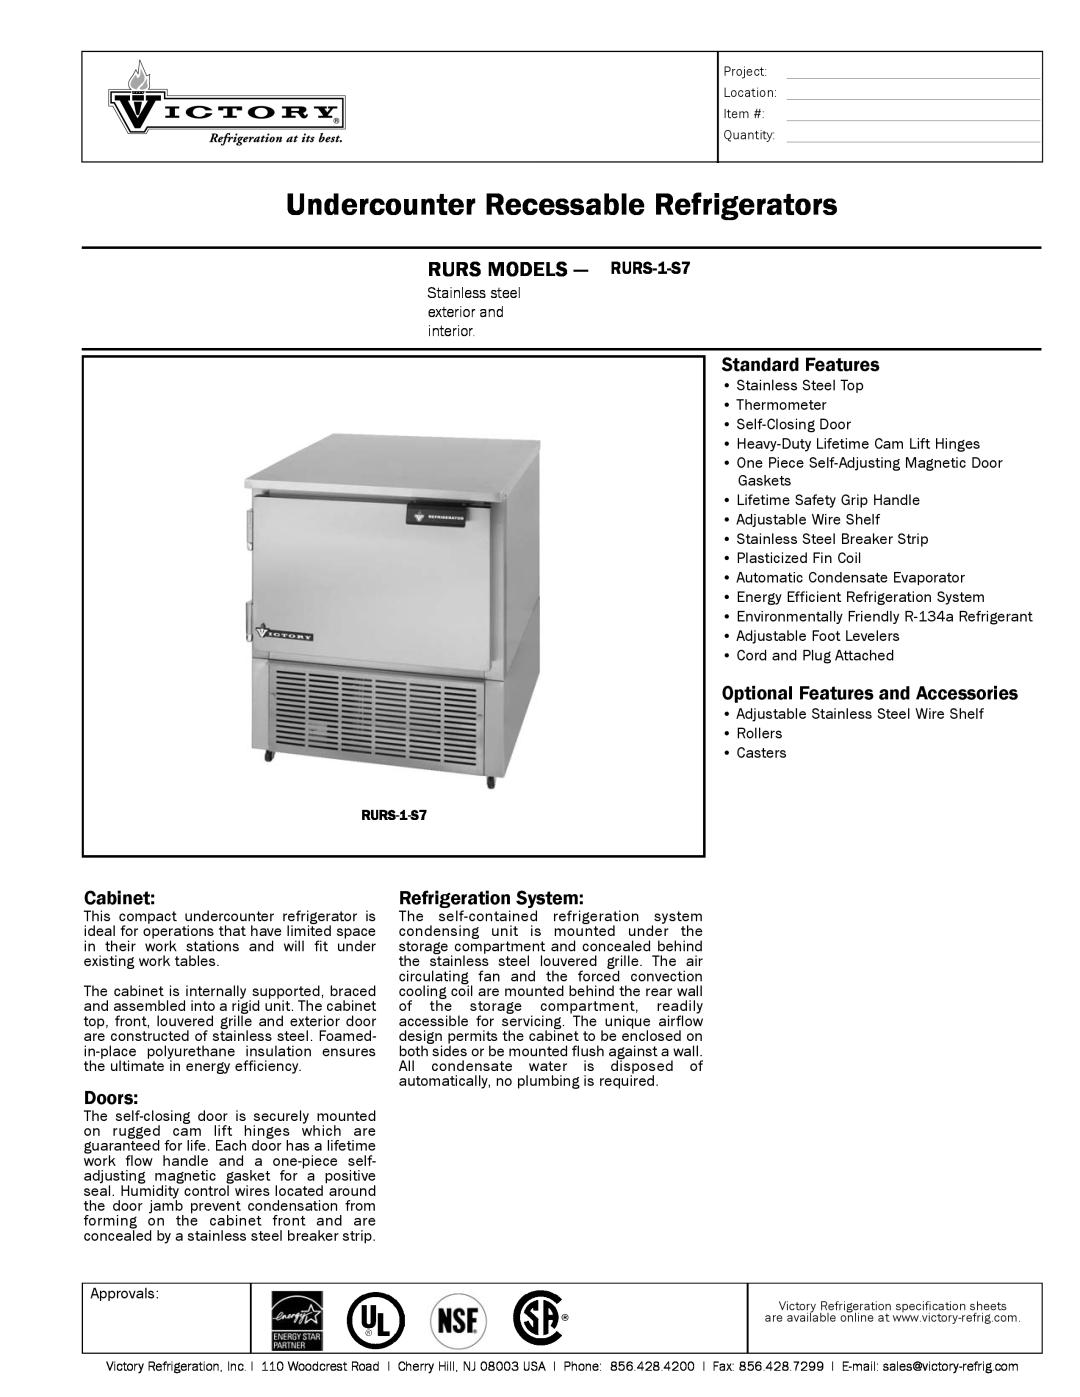 Victory Refrigeration specifications Undercounter Recessable Refrigerators, RURS MODELS - RURS-1-S7, Standard Features 